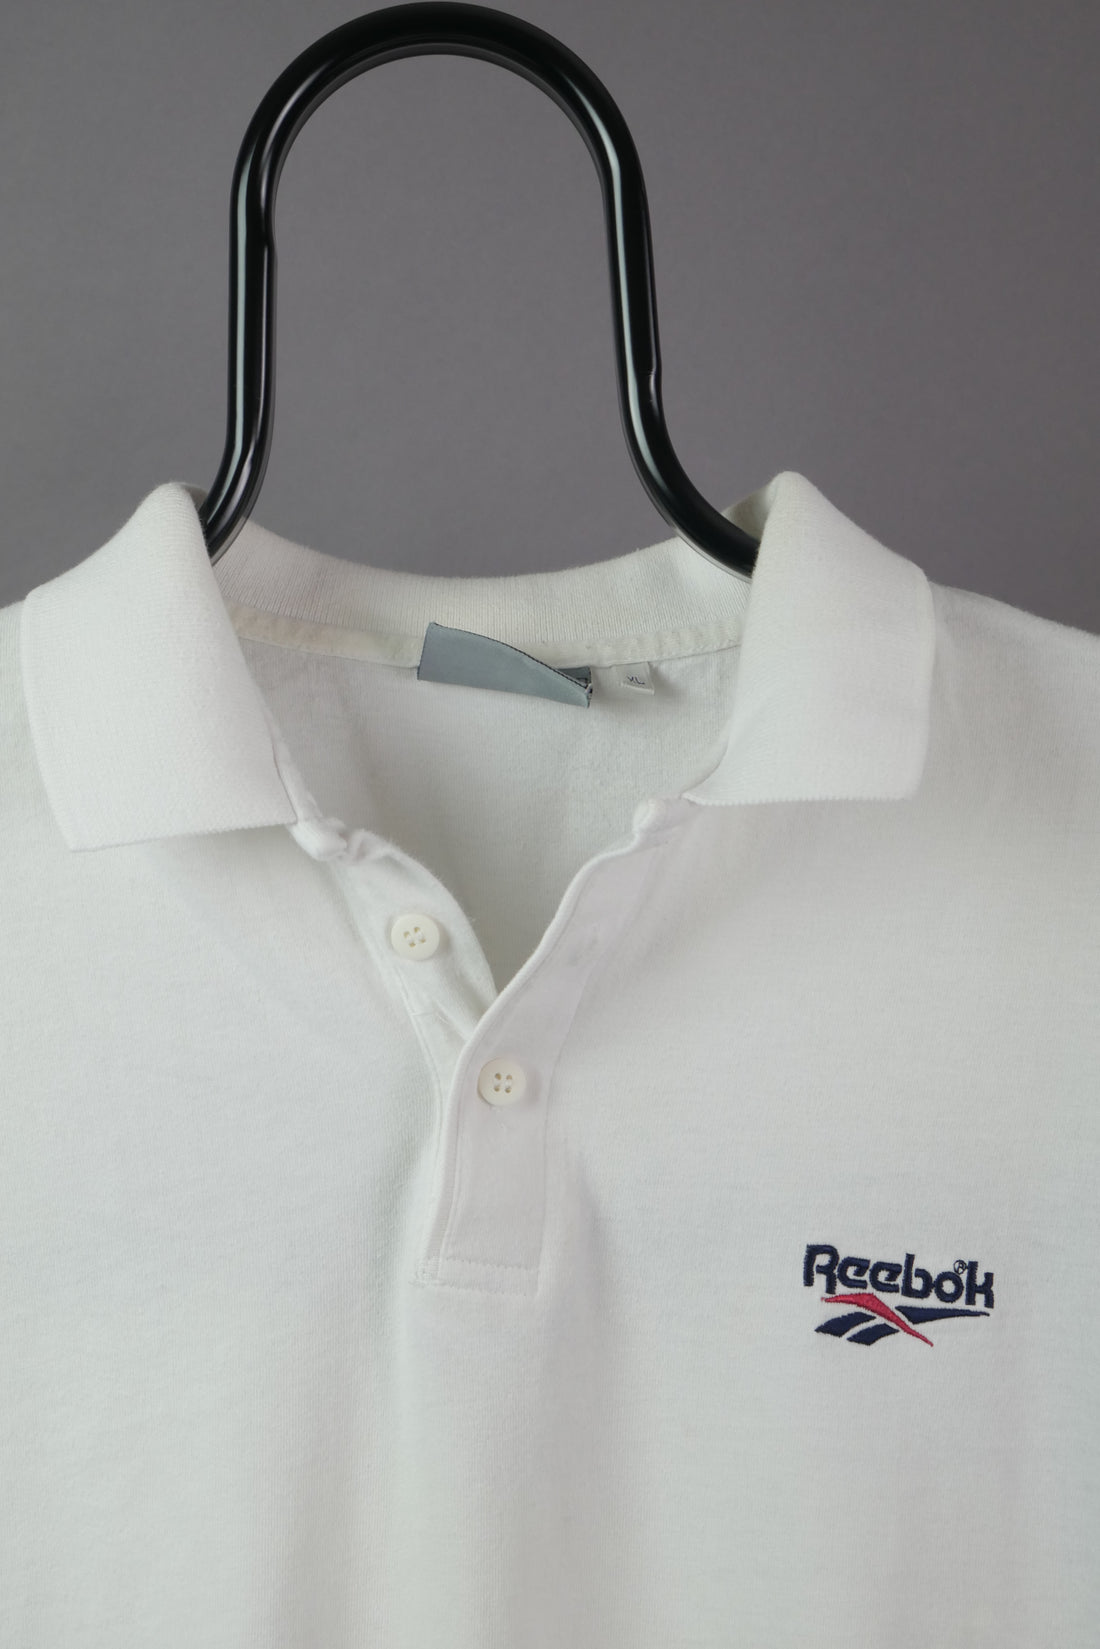 The Reebok Polo Shirt (XL)